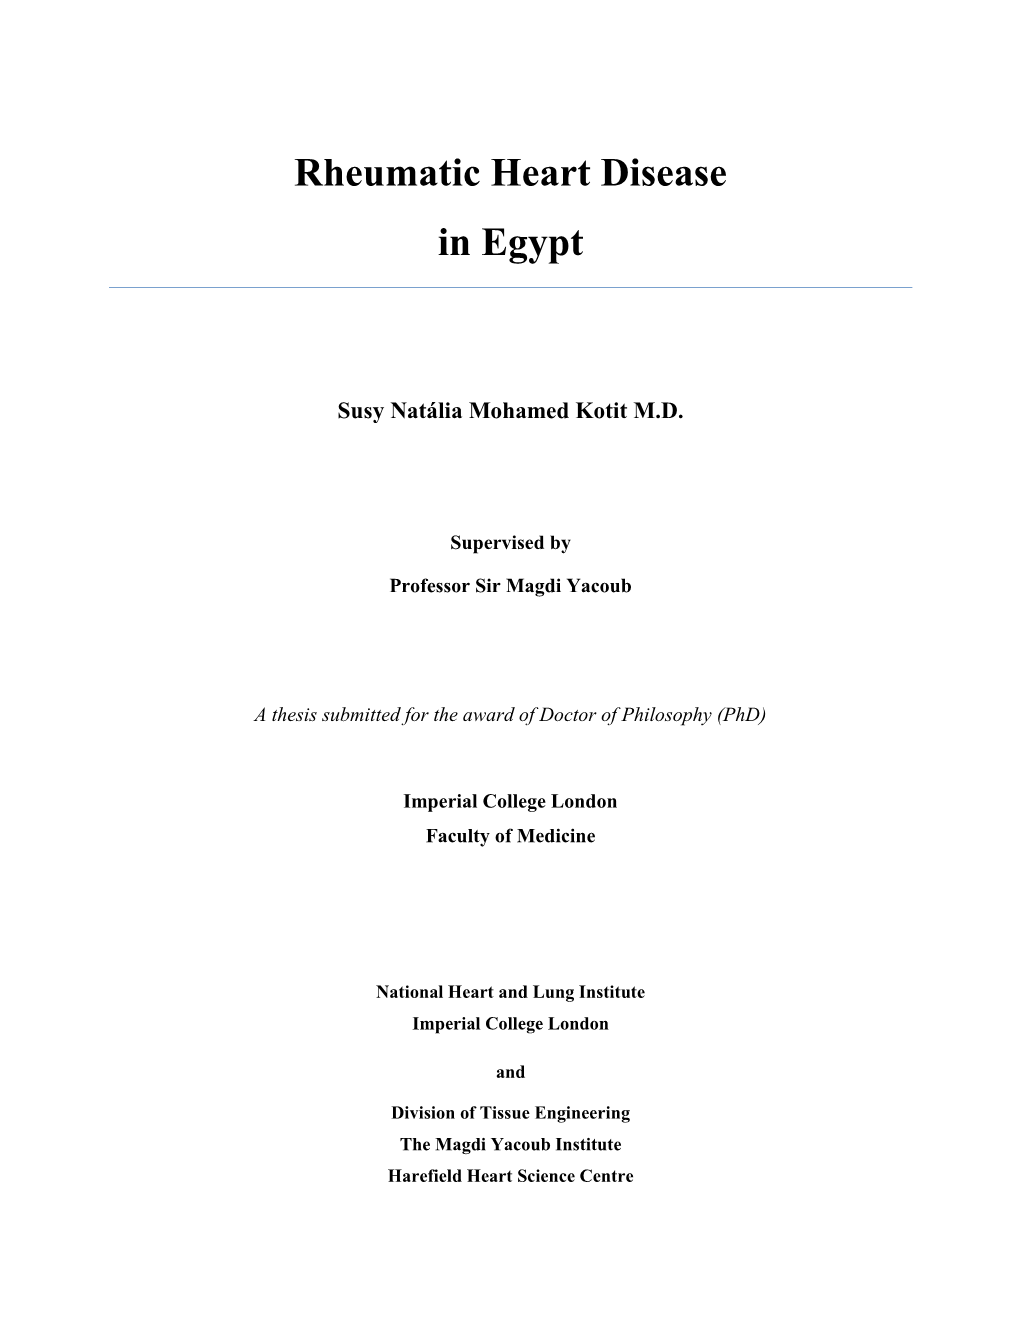 Rheumatic Heart Disease in Egypt